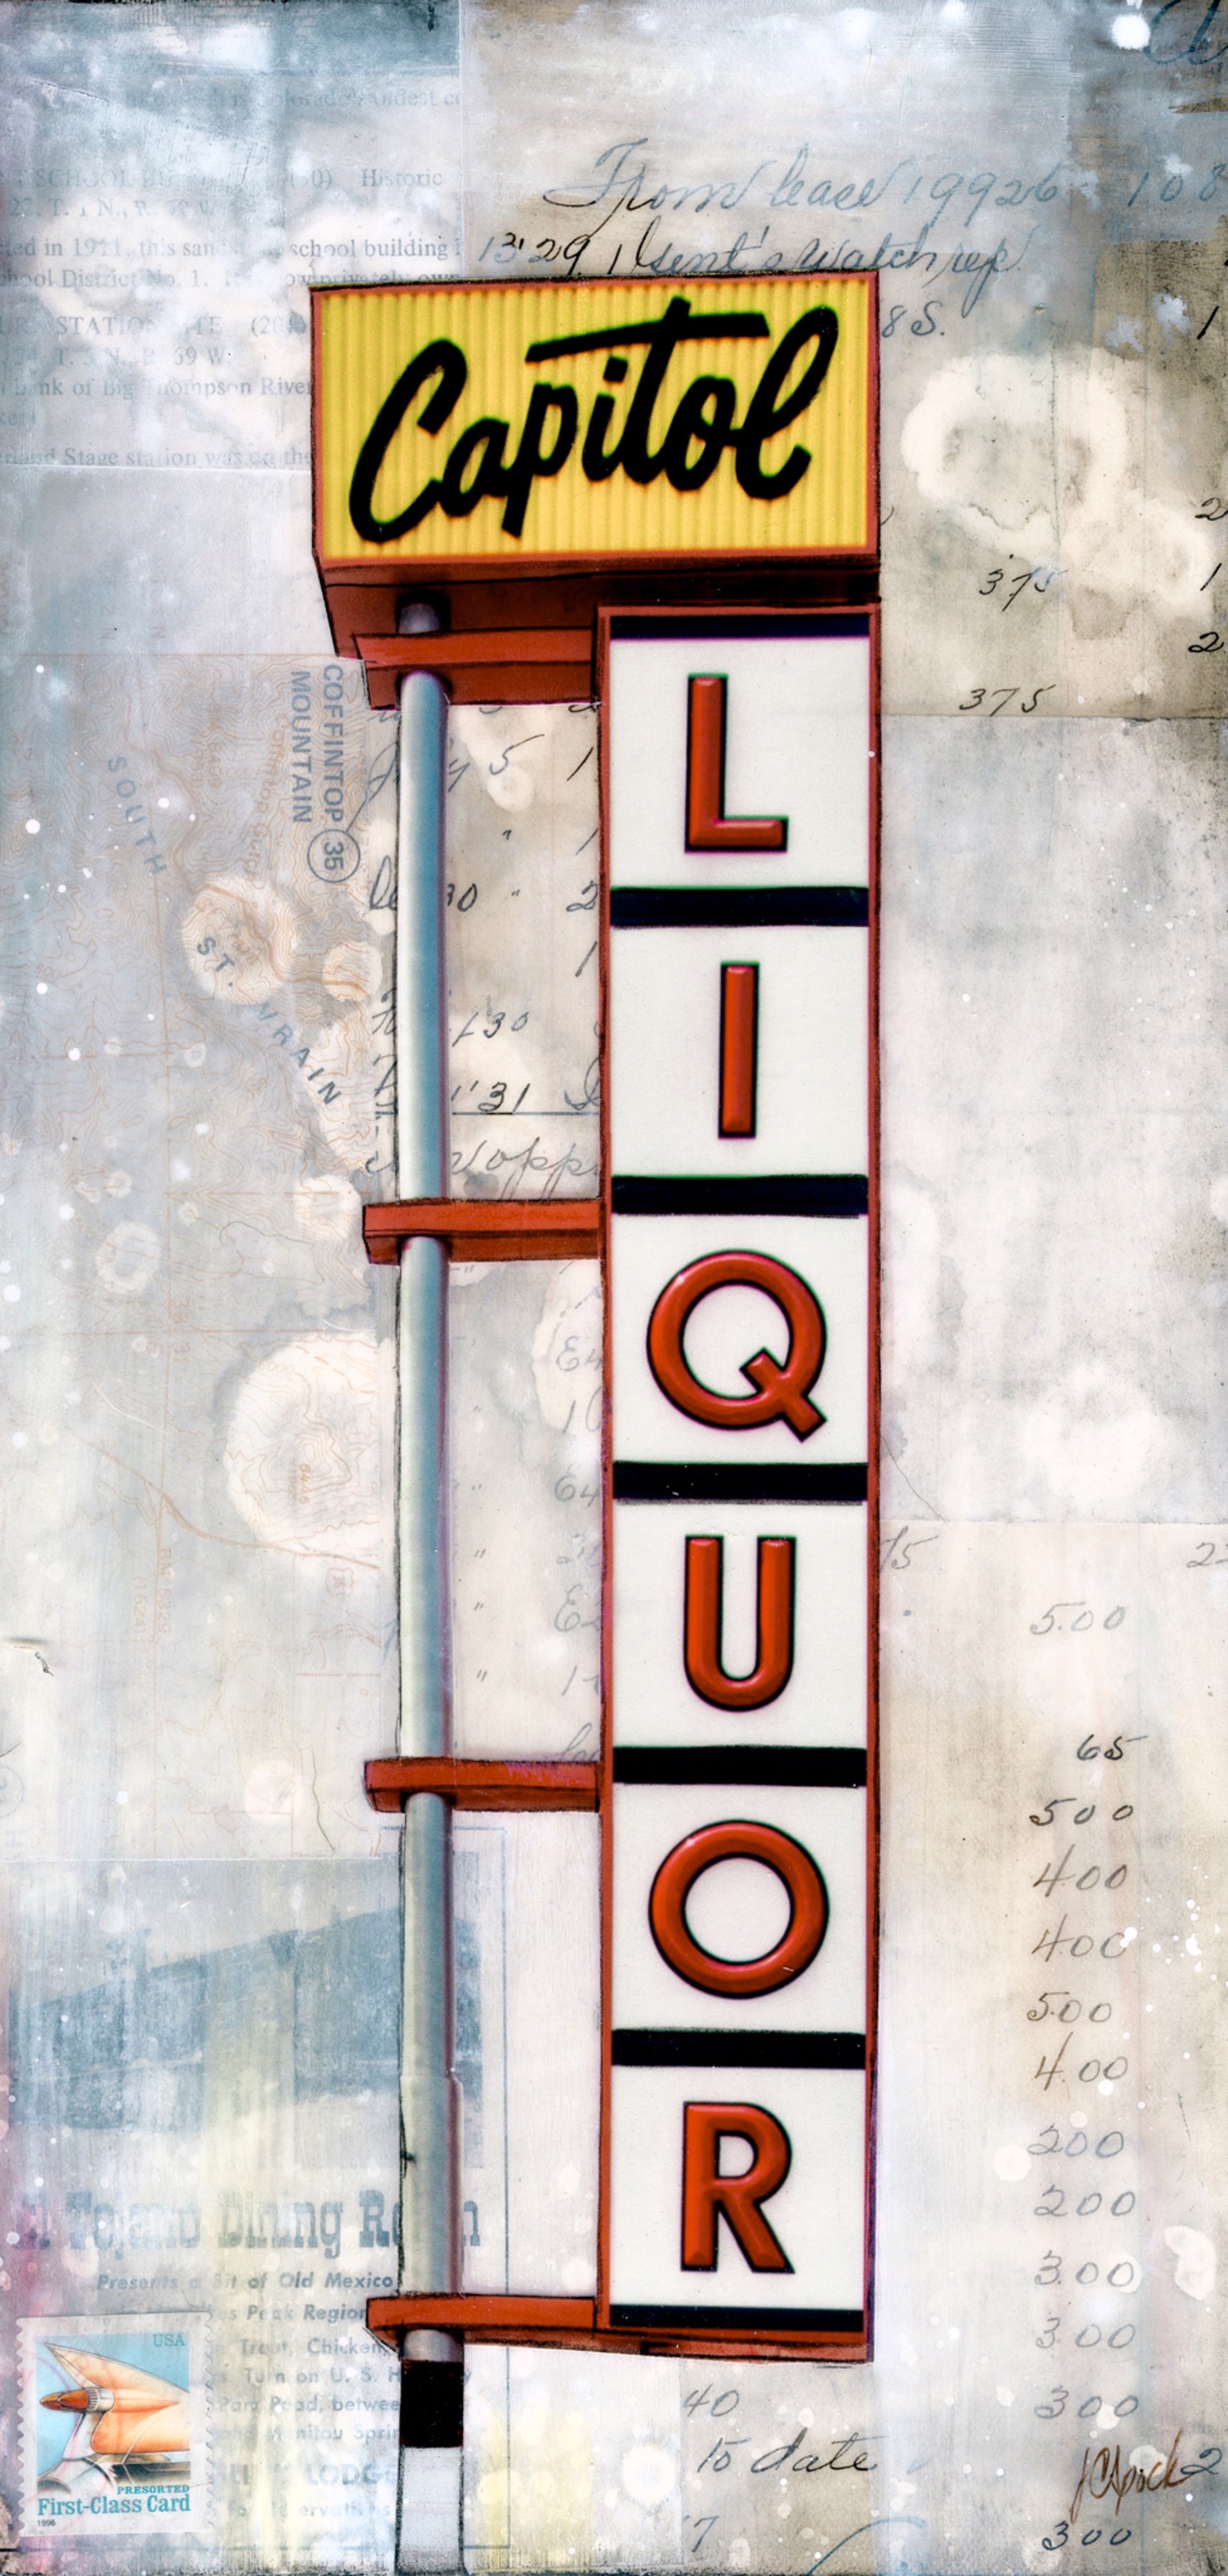 Capitol Liquor by JC Spock